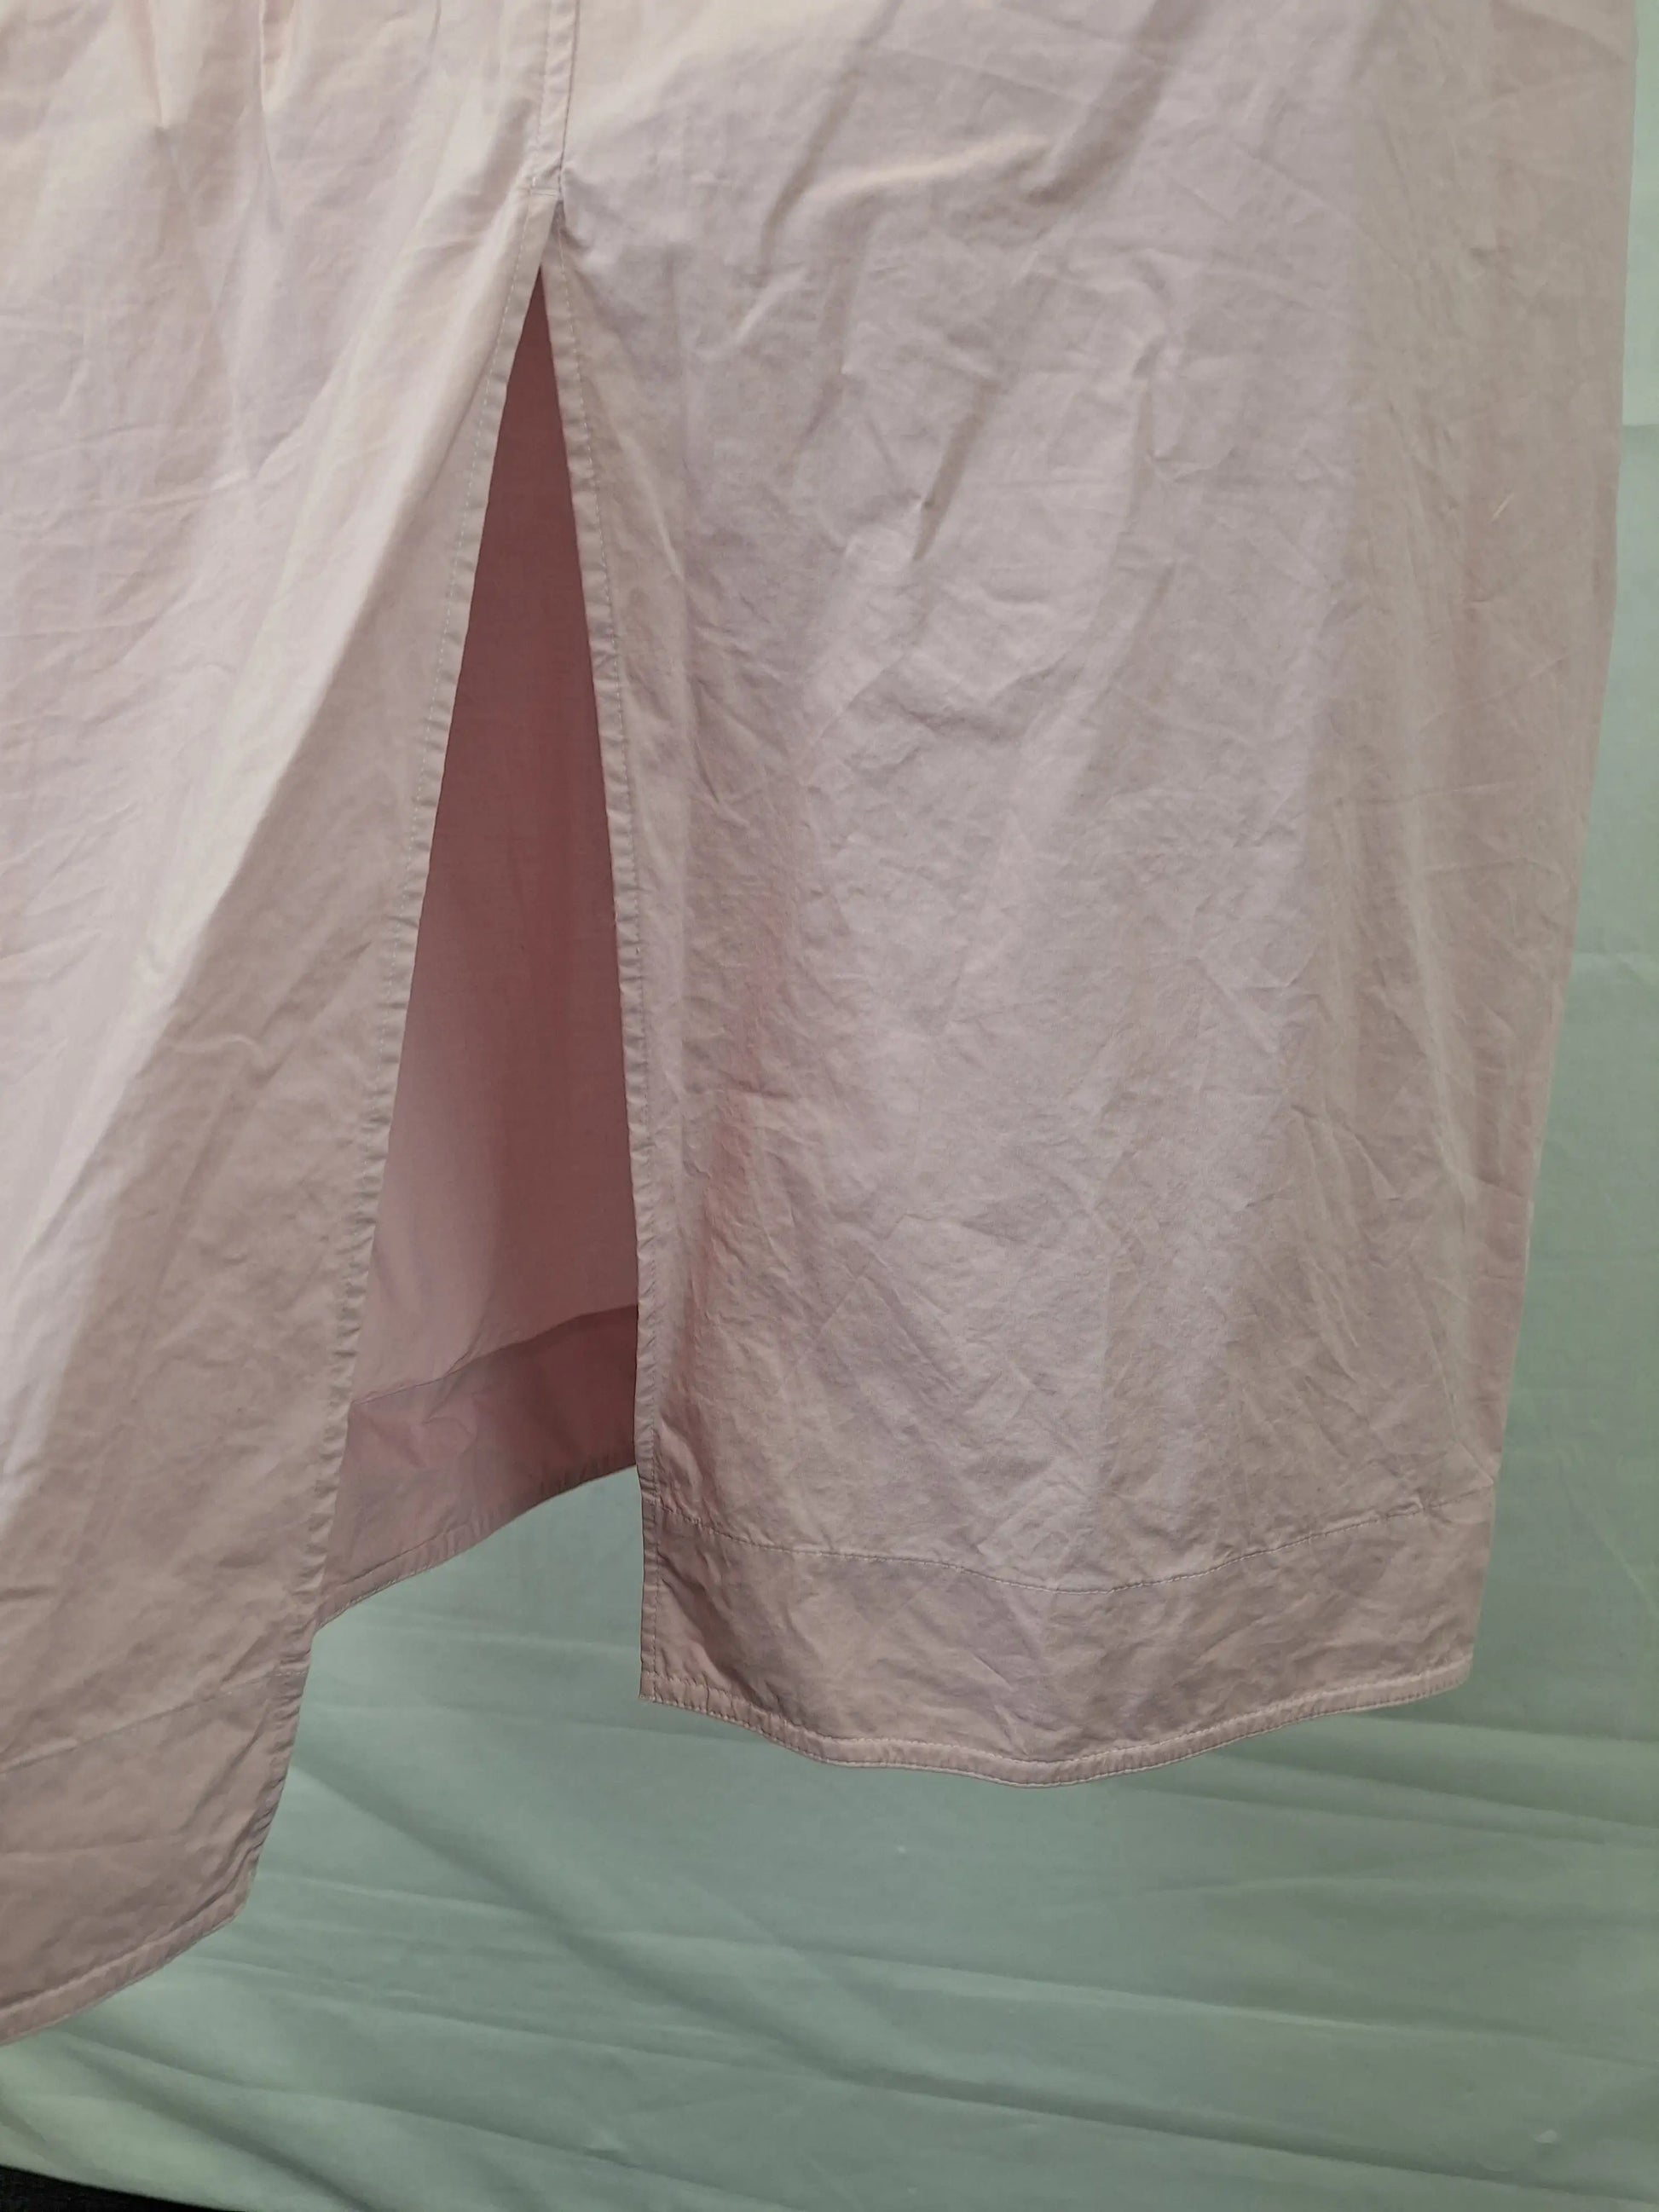 Cos Blush Waist Tie Midi Dress Size 12 by SwapUp-Online Second Hand Store-Online Thrift Store